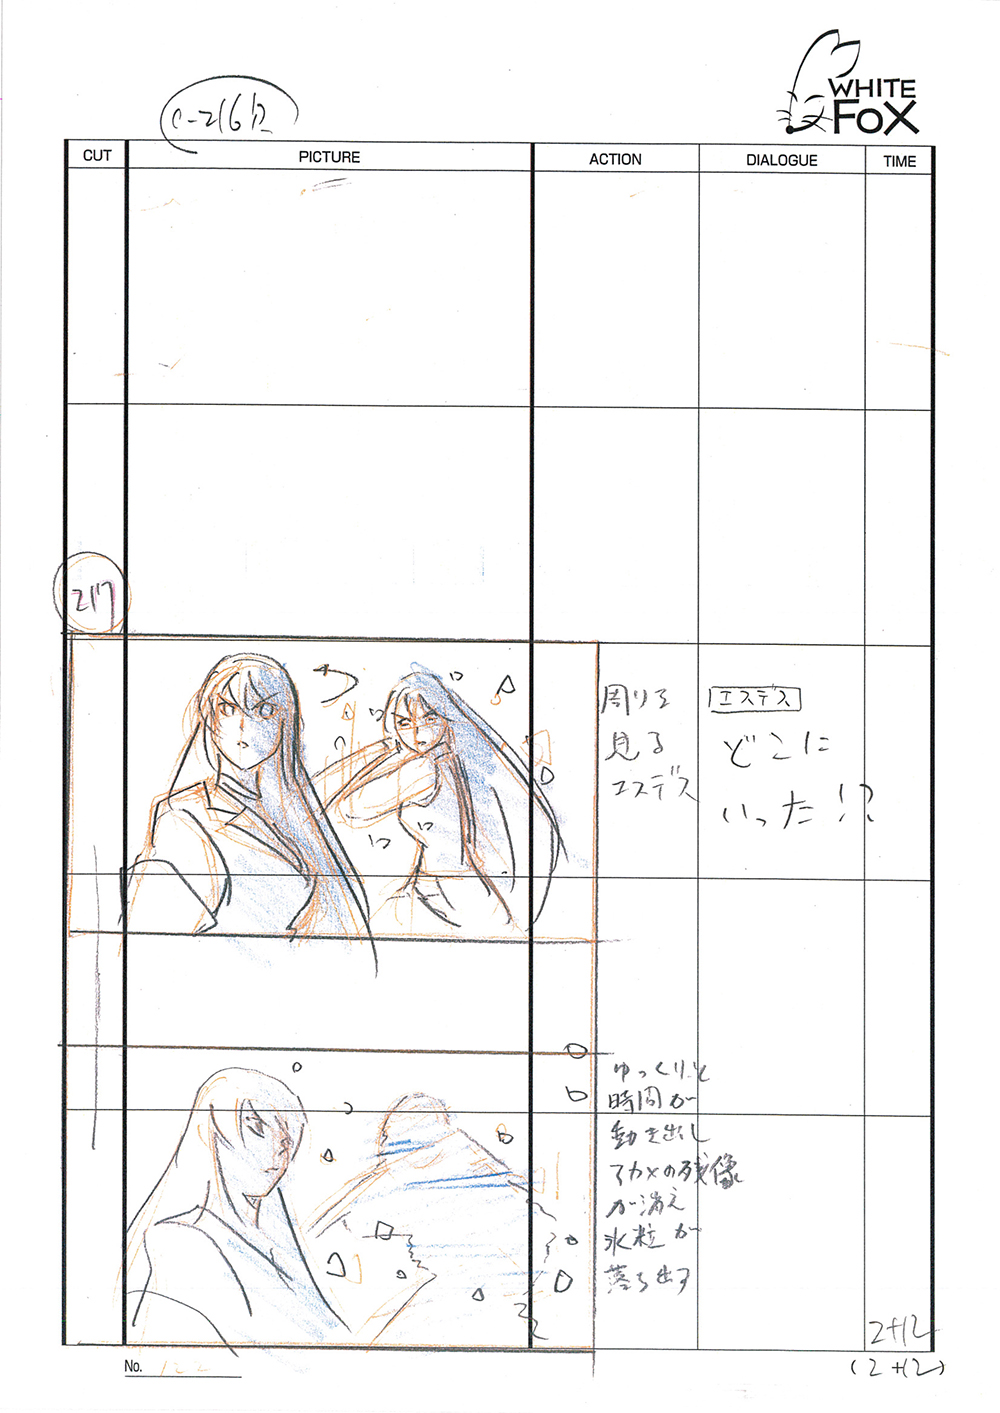 Akame ga Kill Episode 24 Storyboard Leak 126